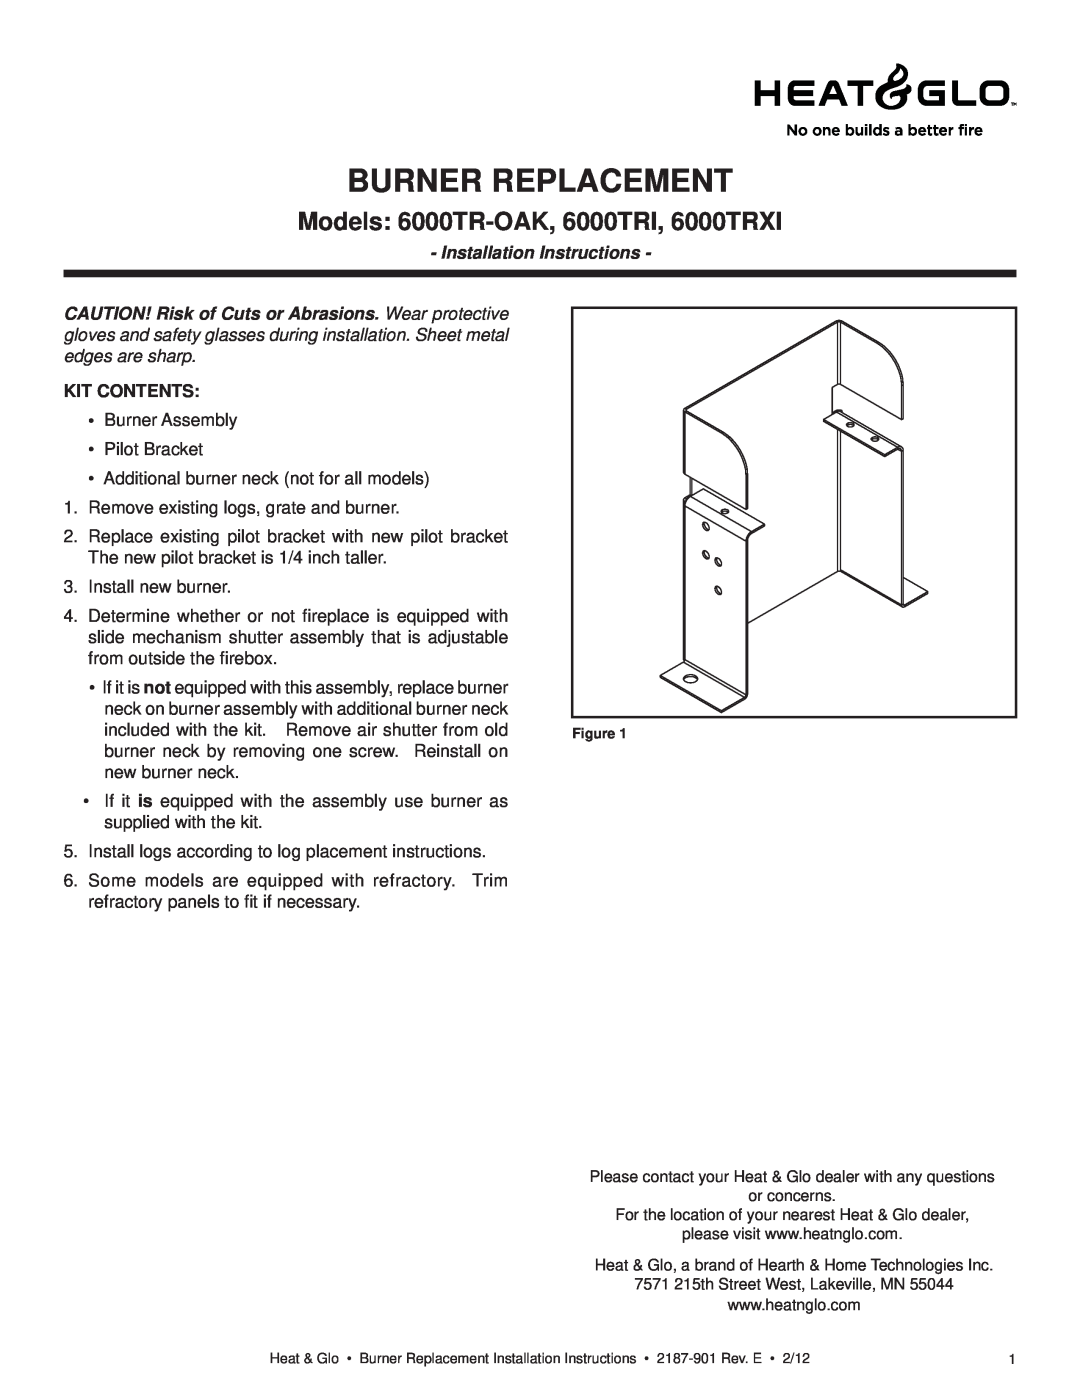 Heat & Glo LifeStyle installation instructions Burner Replacement, Models 6000TR-OAK,6000TRI, 6000TRXI, Kit Contents 